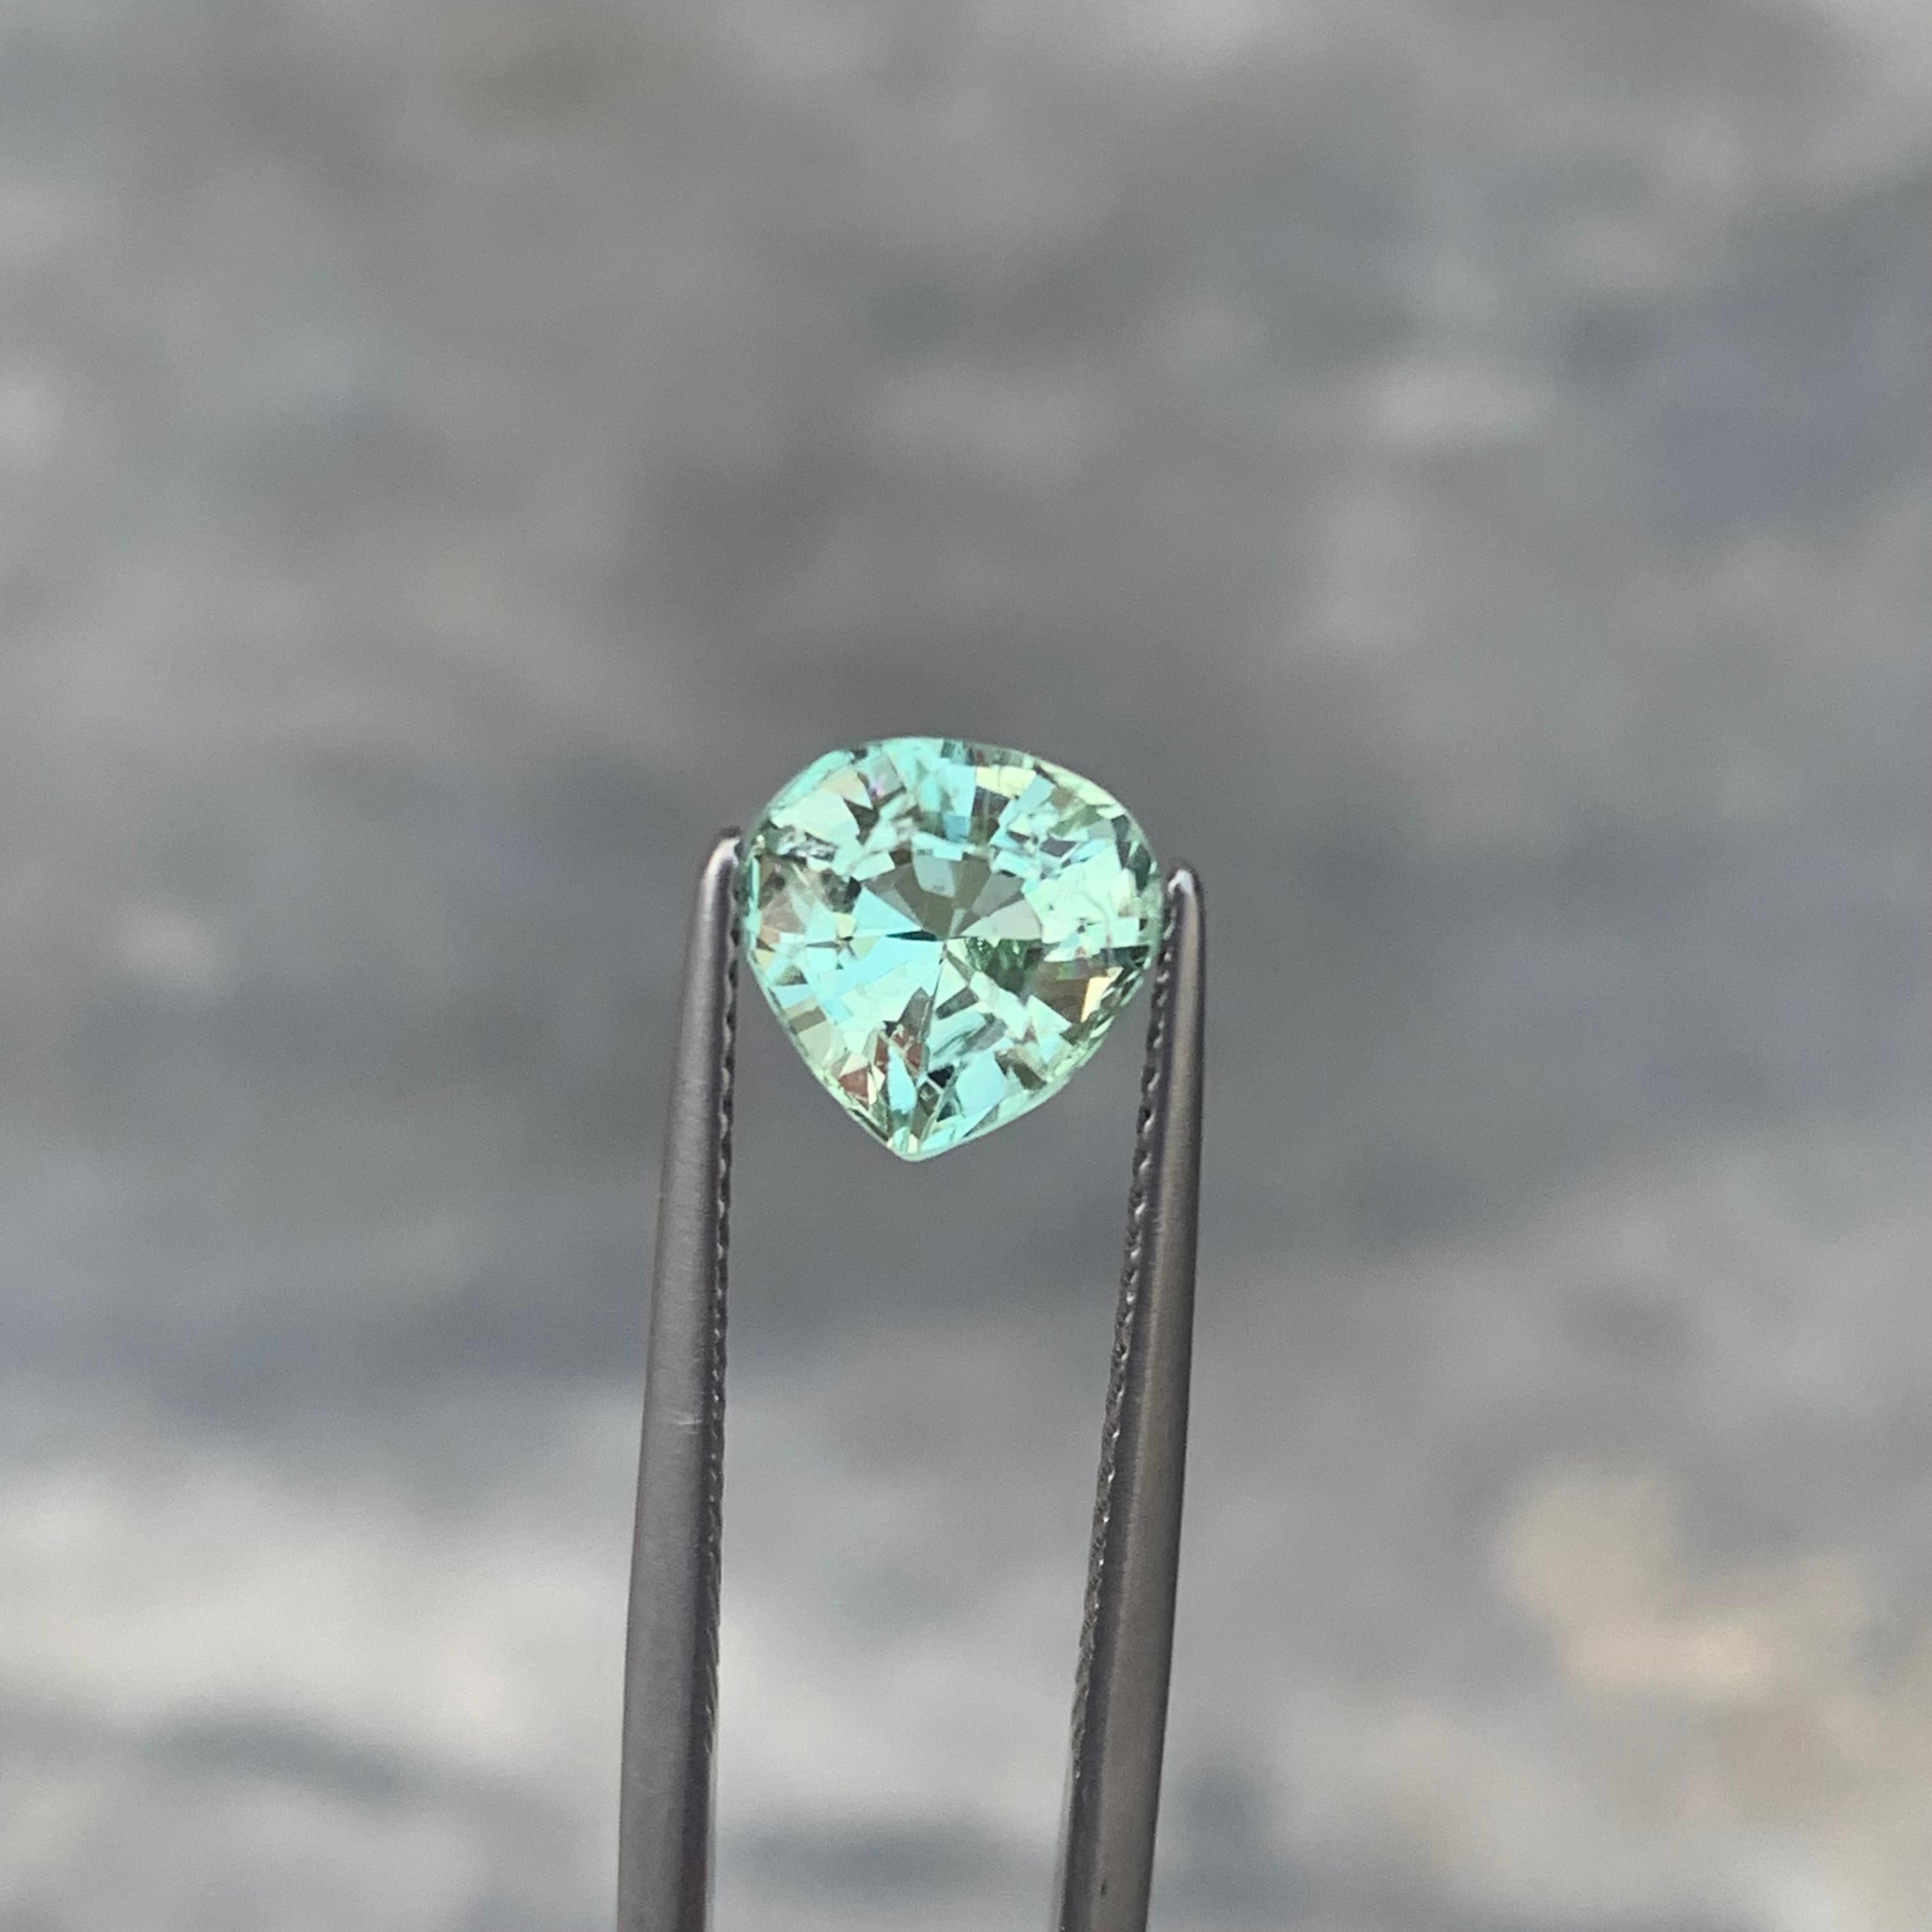 Heart Cut 1.80 Carat Loose Mint Green Tourmaline Gemstone Heart Shape from Afghan Mines For Sale